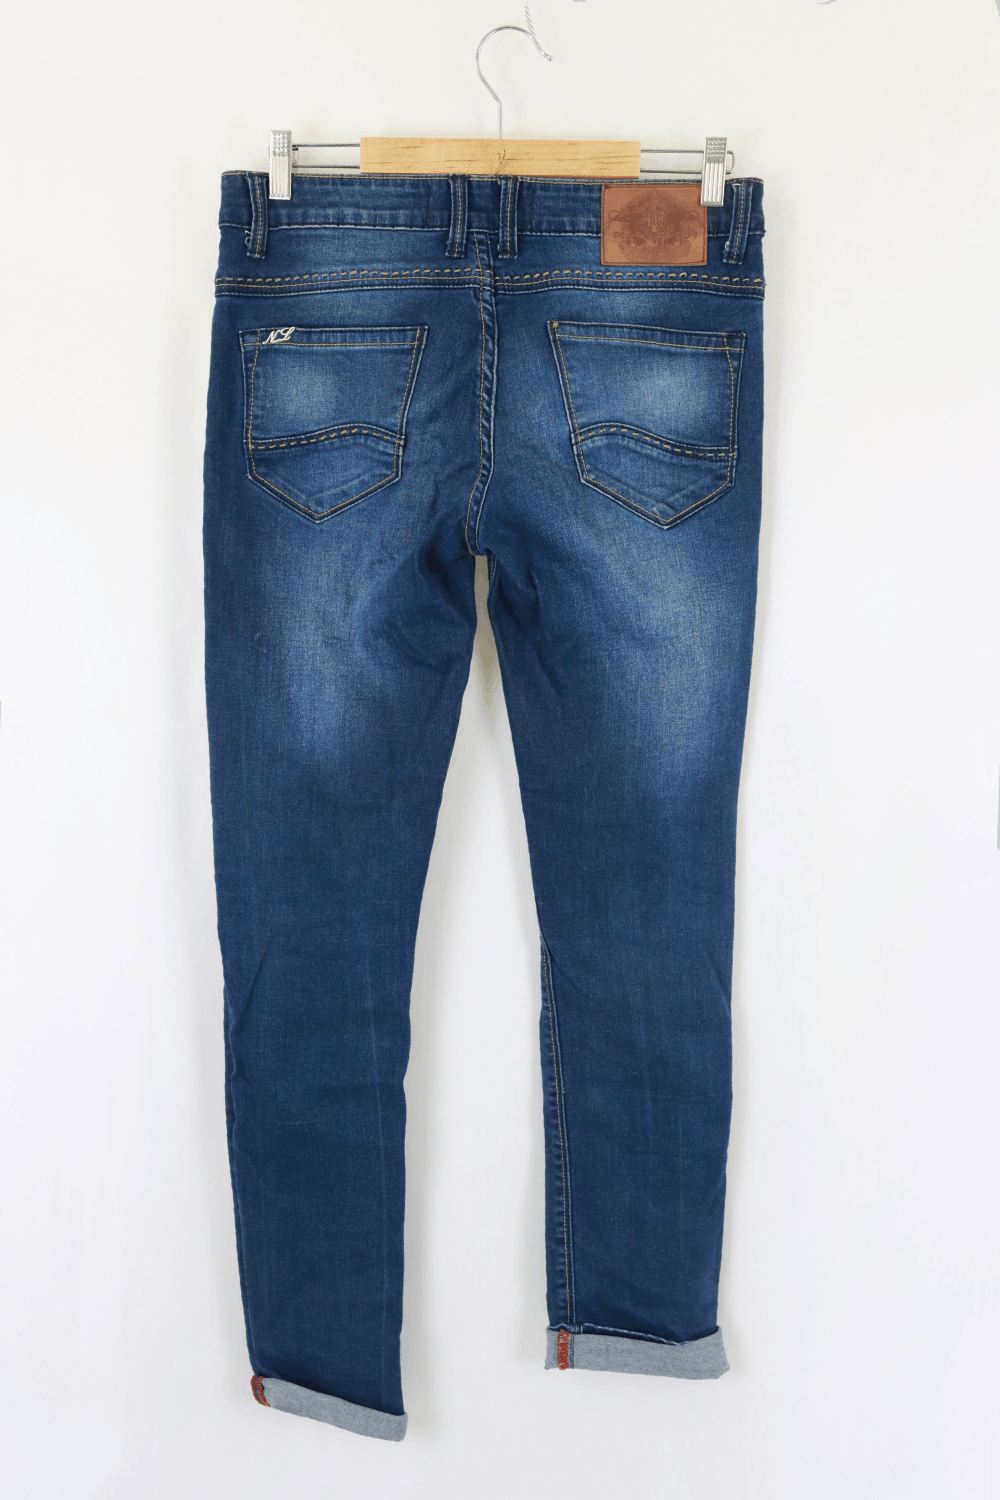 New London Blue Denim Jeans 8